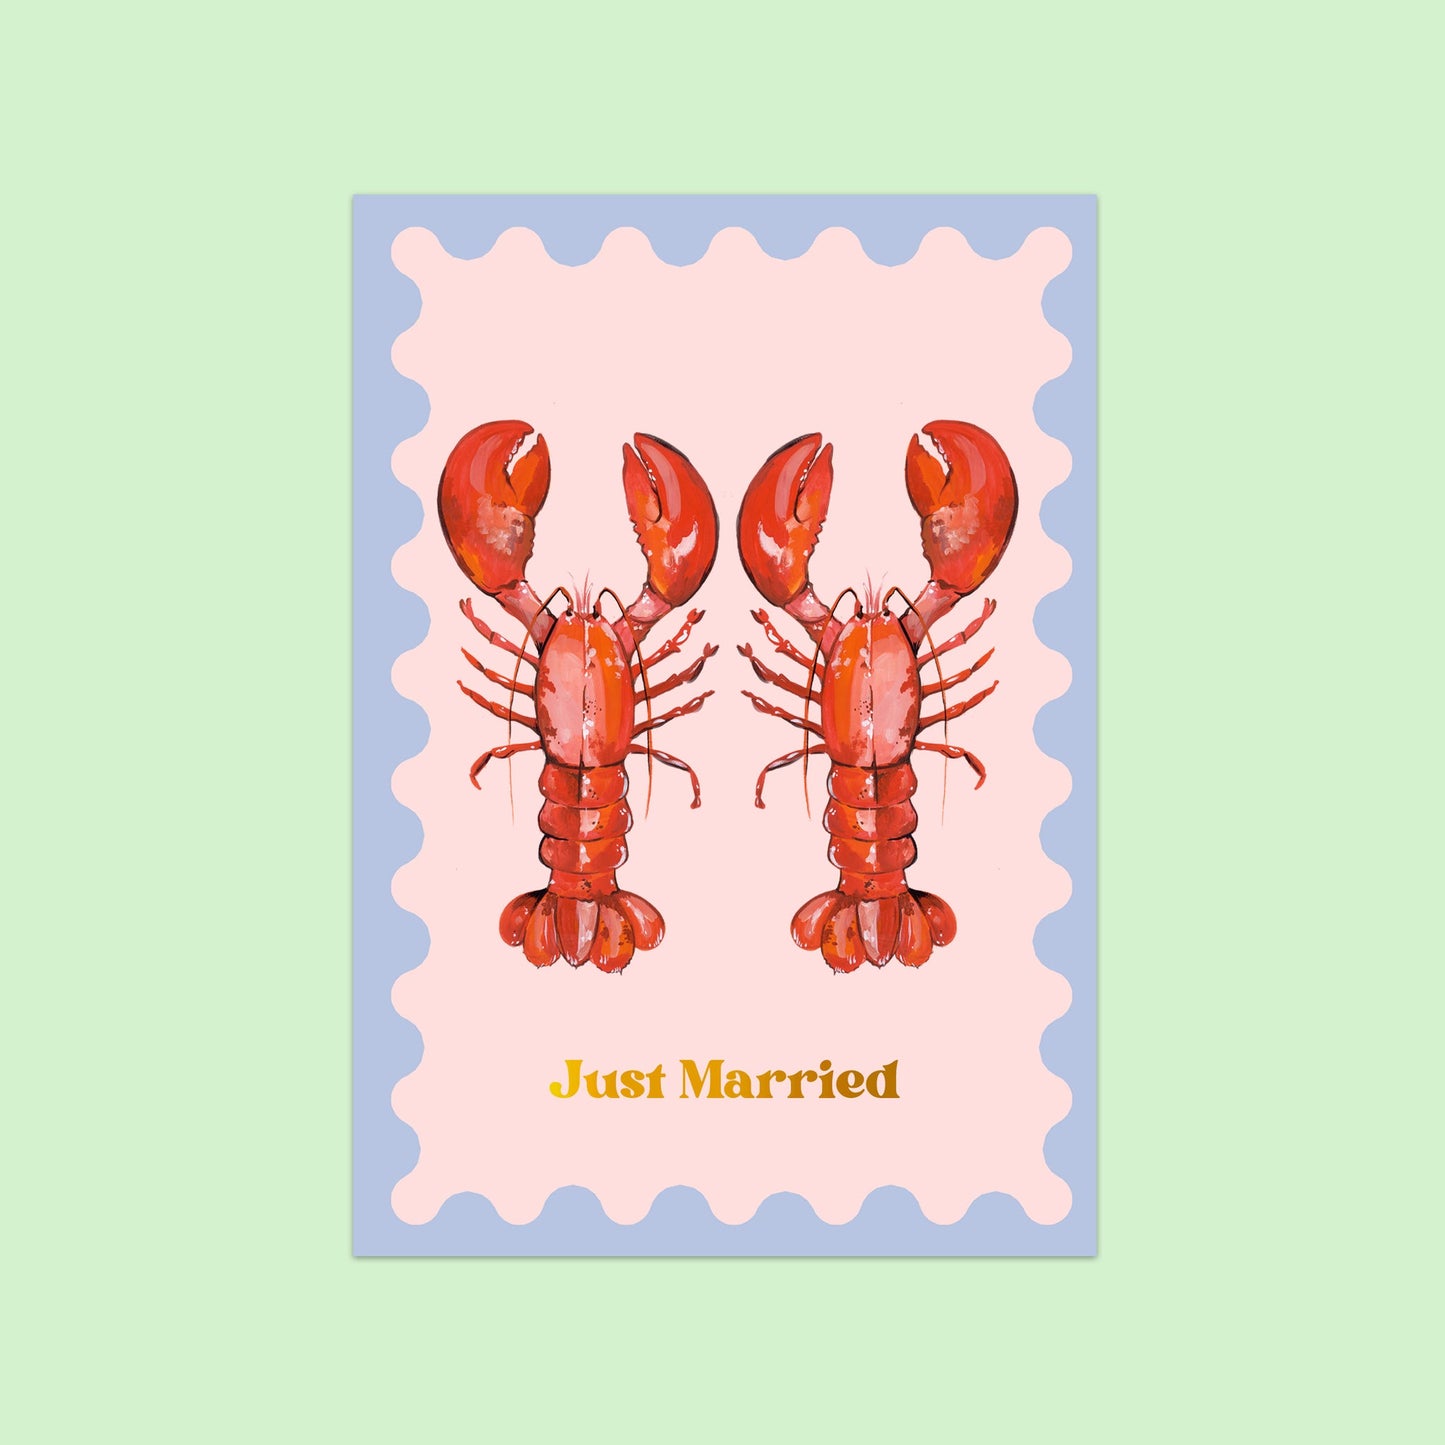 Just Married - Lobsters